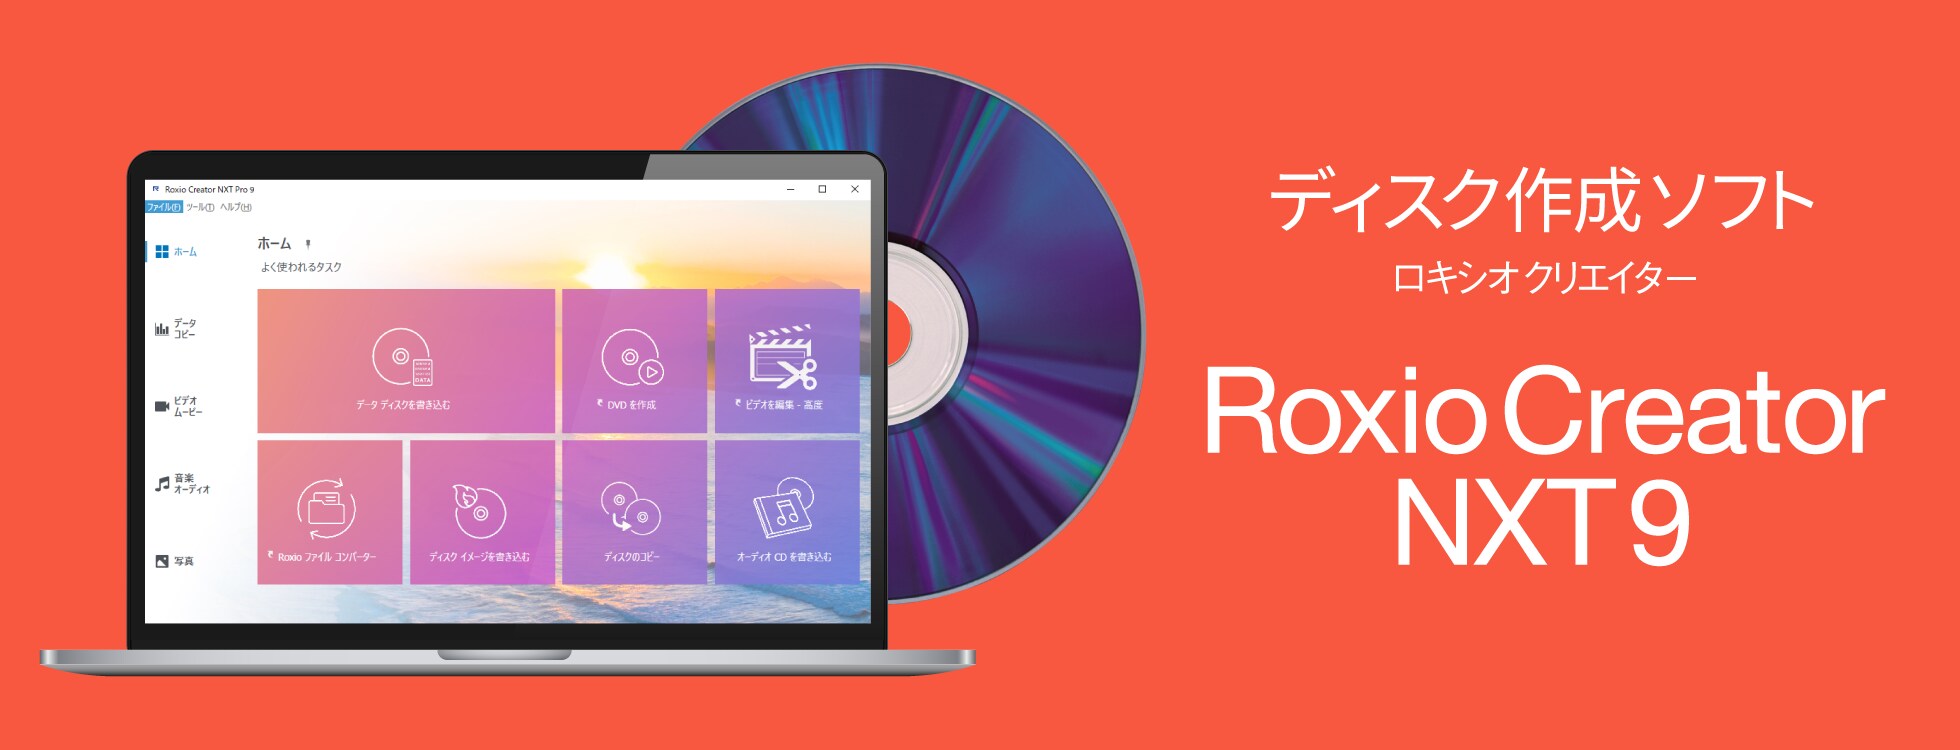 Roxio Creator NXT 9 - 総合ディスク作成ソフト